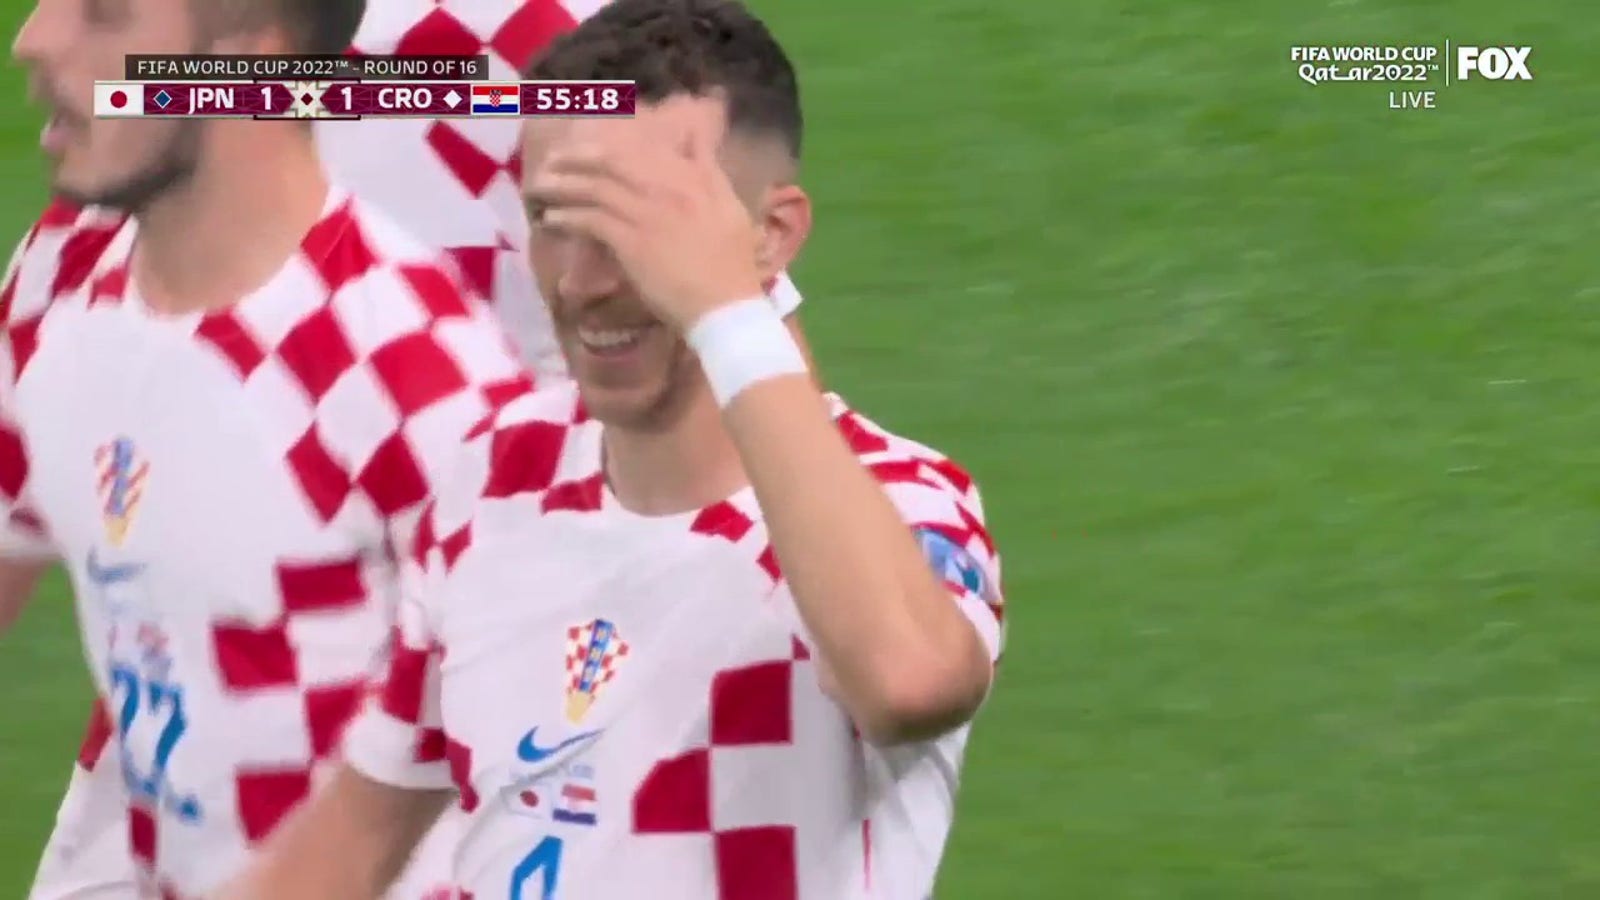 Croatia's Ivan Perisic scores in the 55th minute against Japan